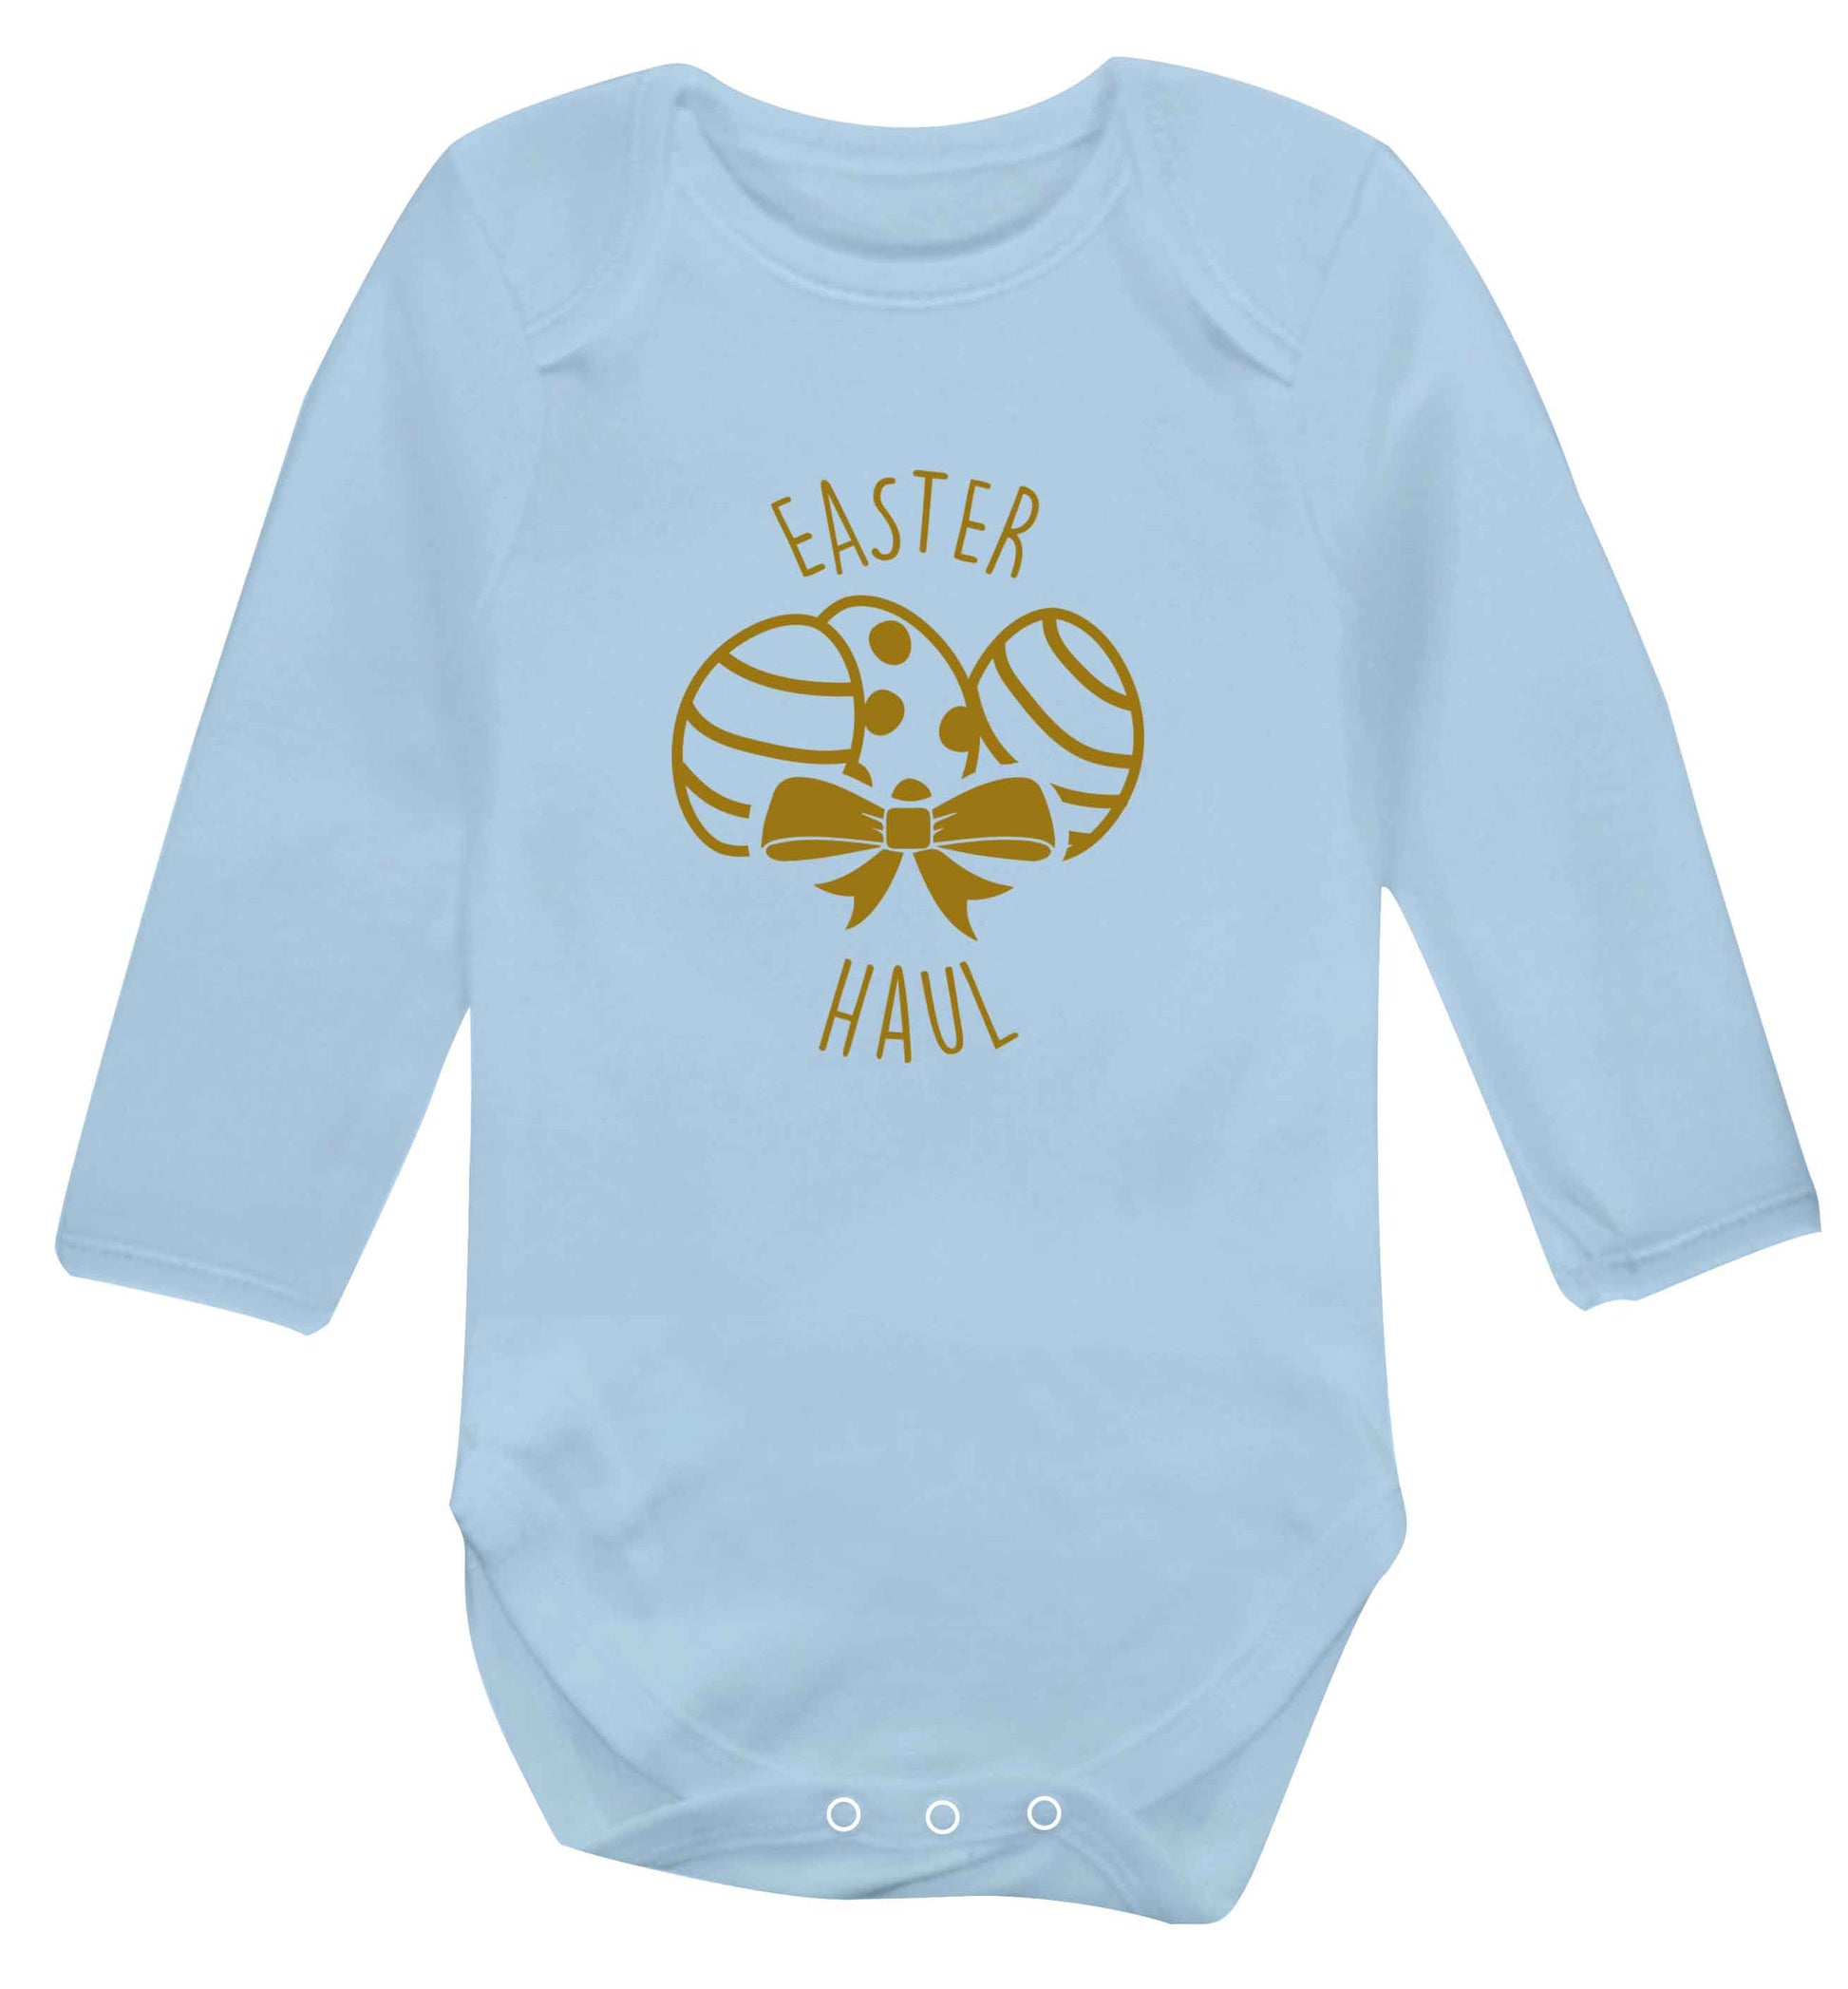 Easter haul baby vest long sleeved pale blue 6-12 months